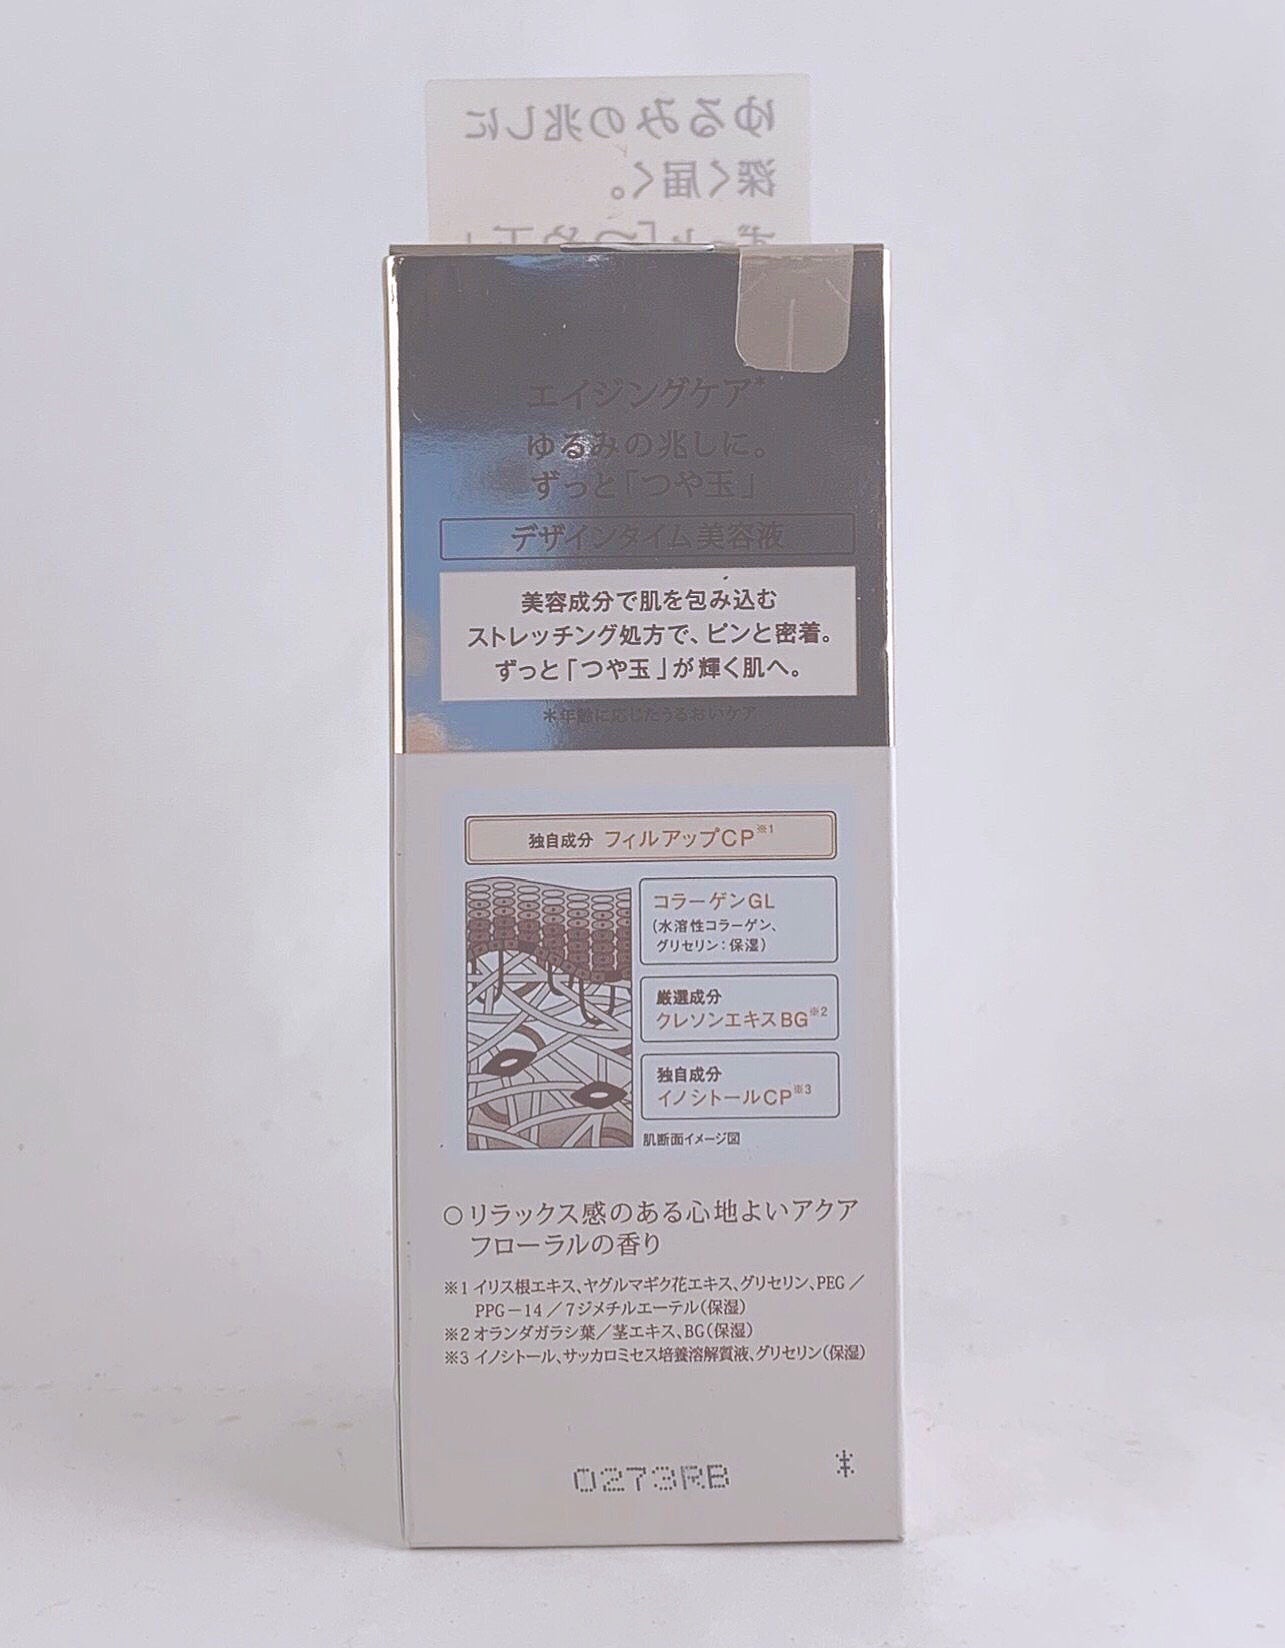 Shiseido Superieur Elixir Skin Care By Age Design Time Serum 40ml,essence,Japan.